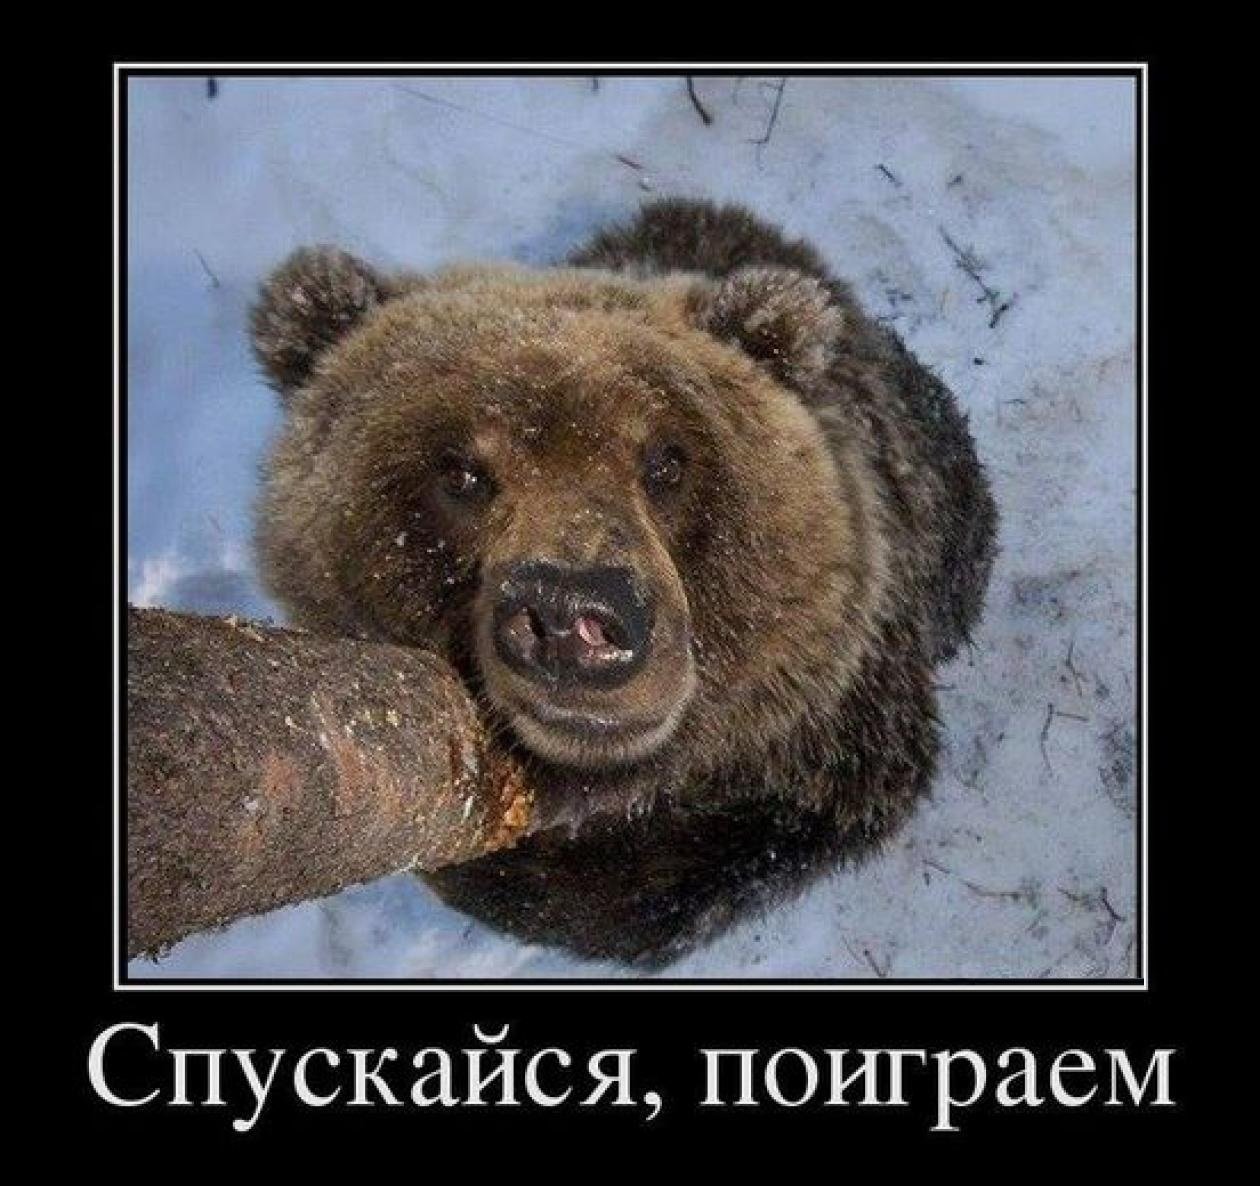 Не давать спуску ситуация. Шутки про медведя. Медведь демотиватор. Приколы про медведей с надписями. Шутки про медведей картинки.